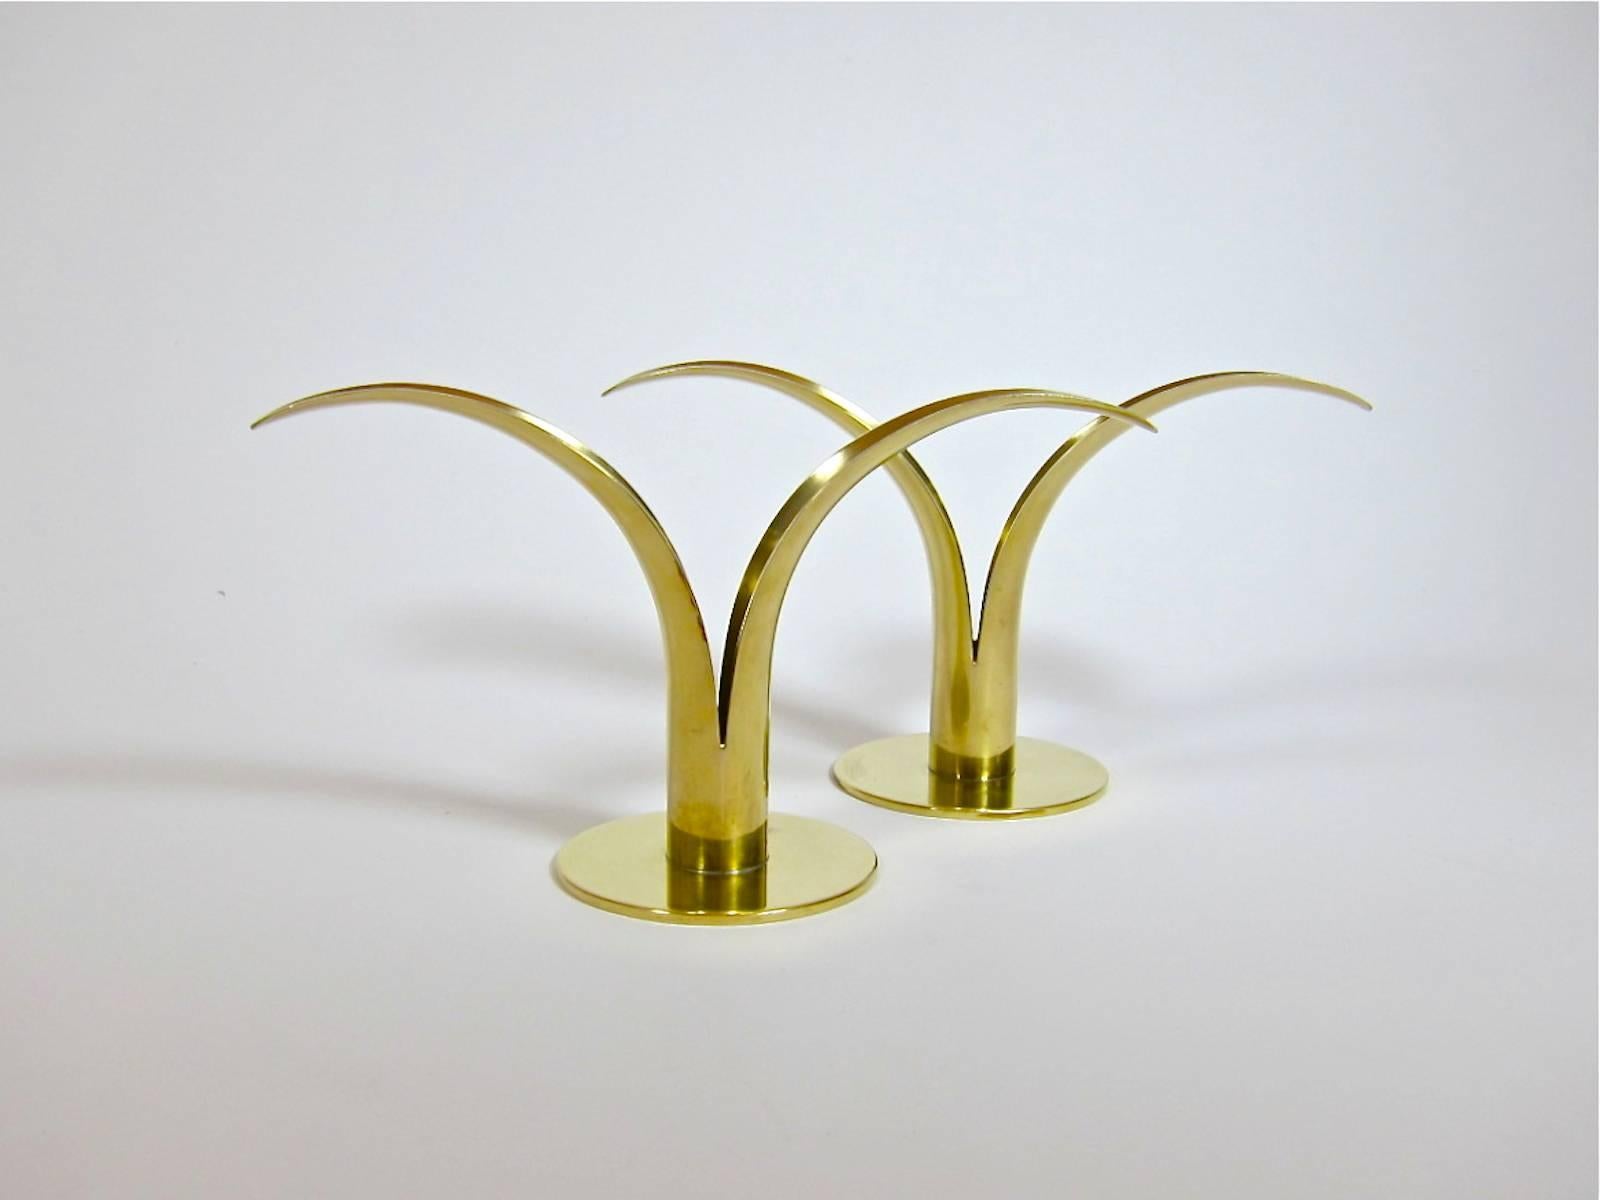 A stylish pair of modernist Liljan (Lily) candlesticks in sleek, golden brass, designed by Ivar Åhlenius-Björk for Ystad Metall of Sweden. Marked Ystad-Metall/made in Sweden on each base with designer's initials 